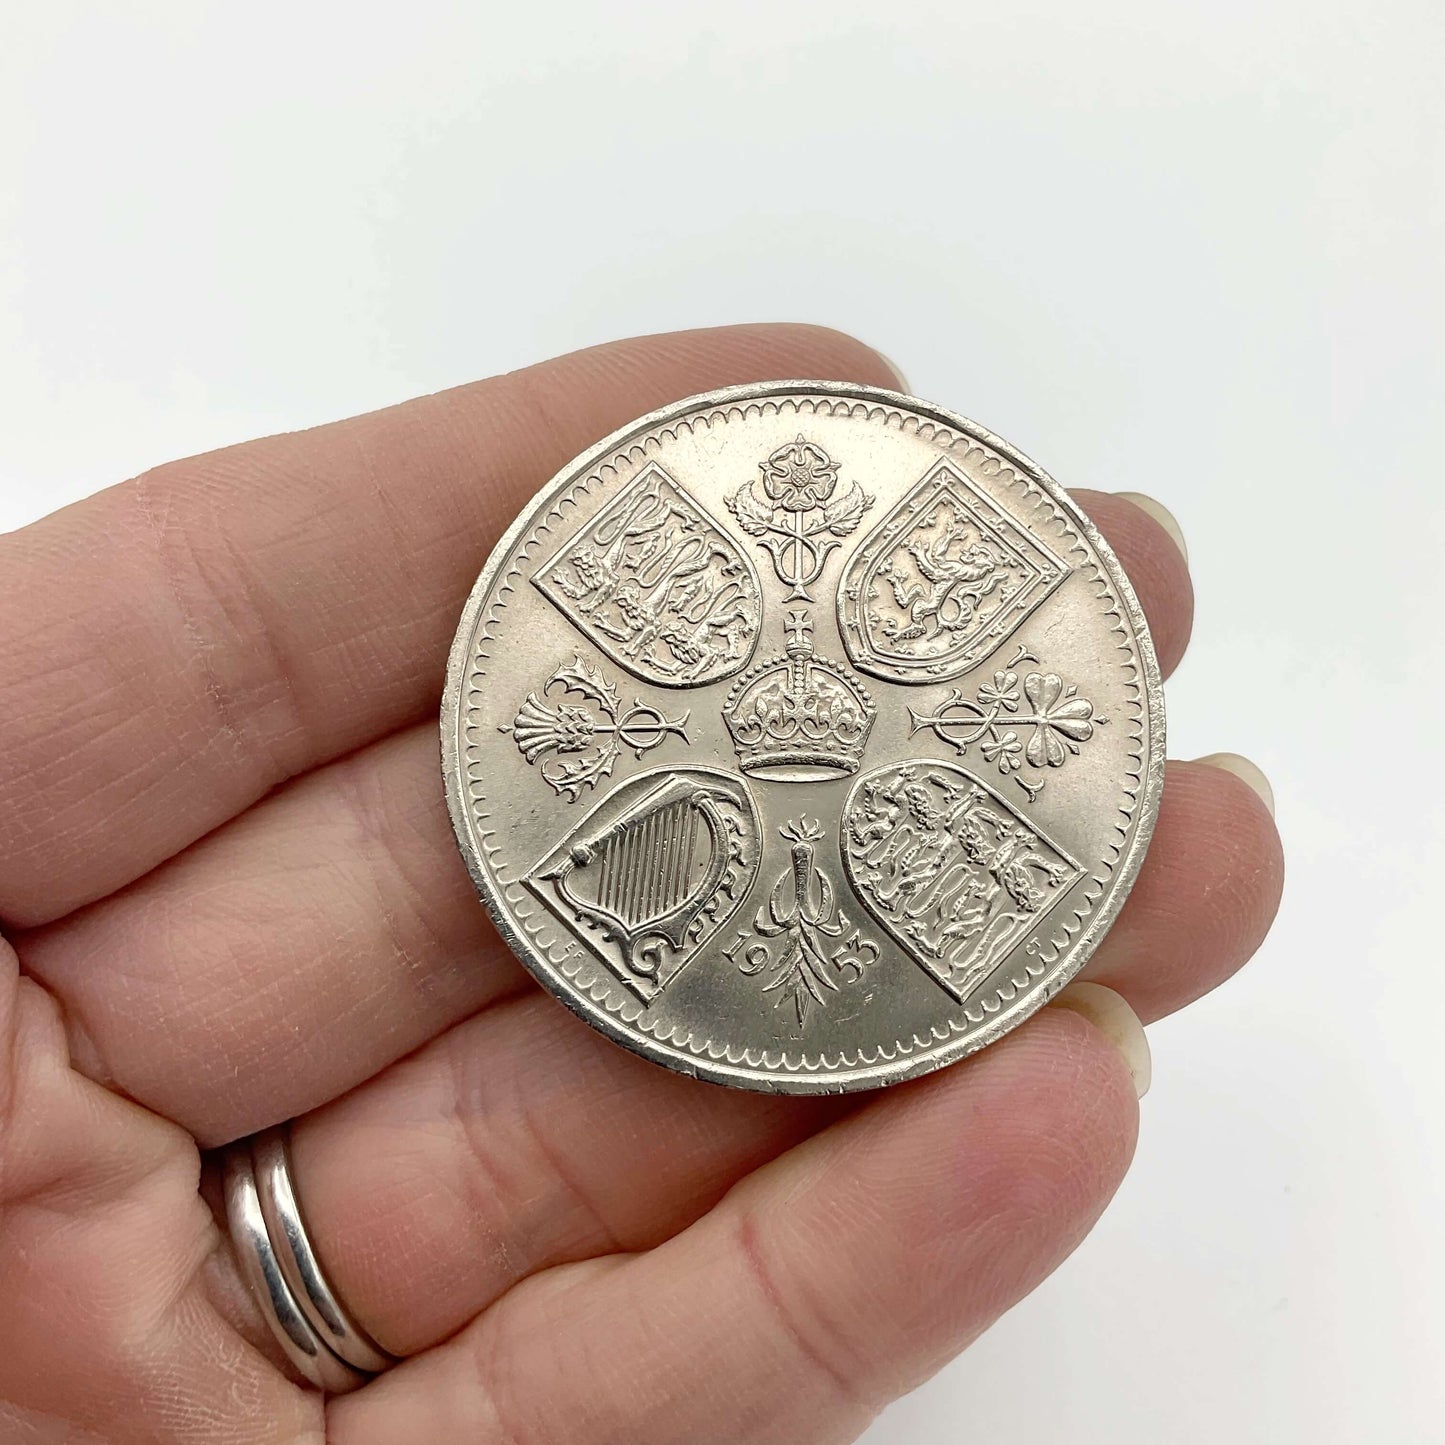 1953 Queen Elizabeth II Coronation Five Shilling Coin